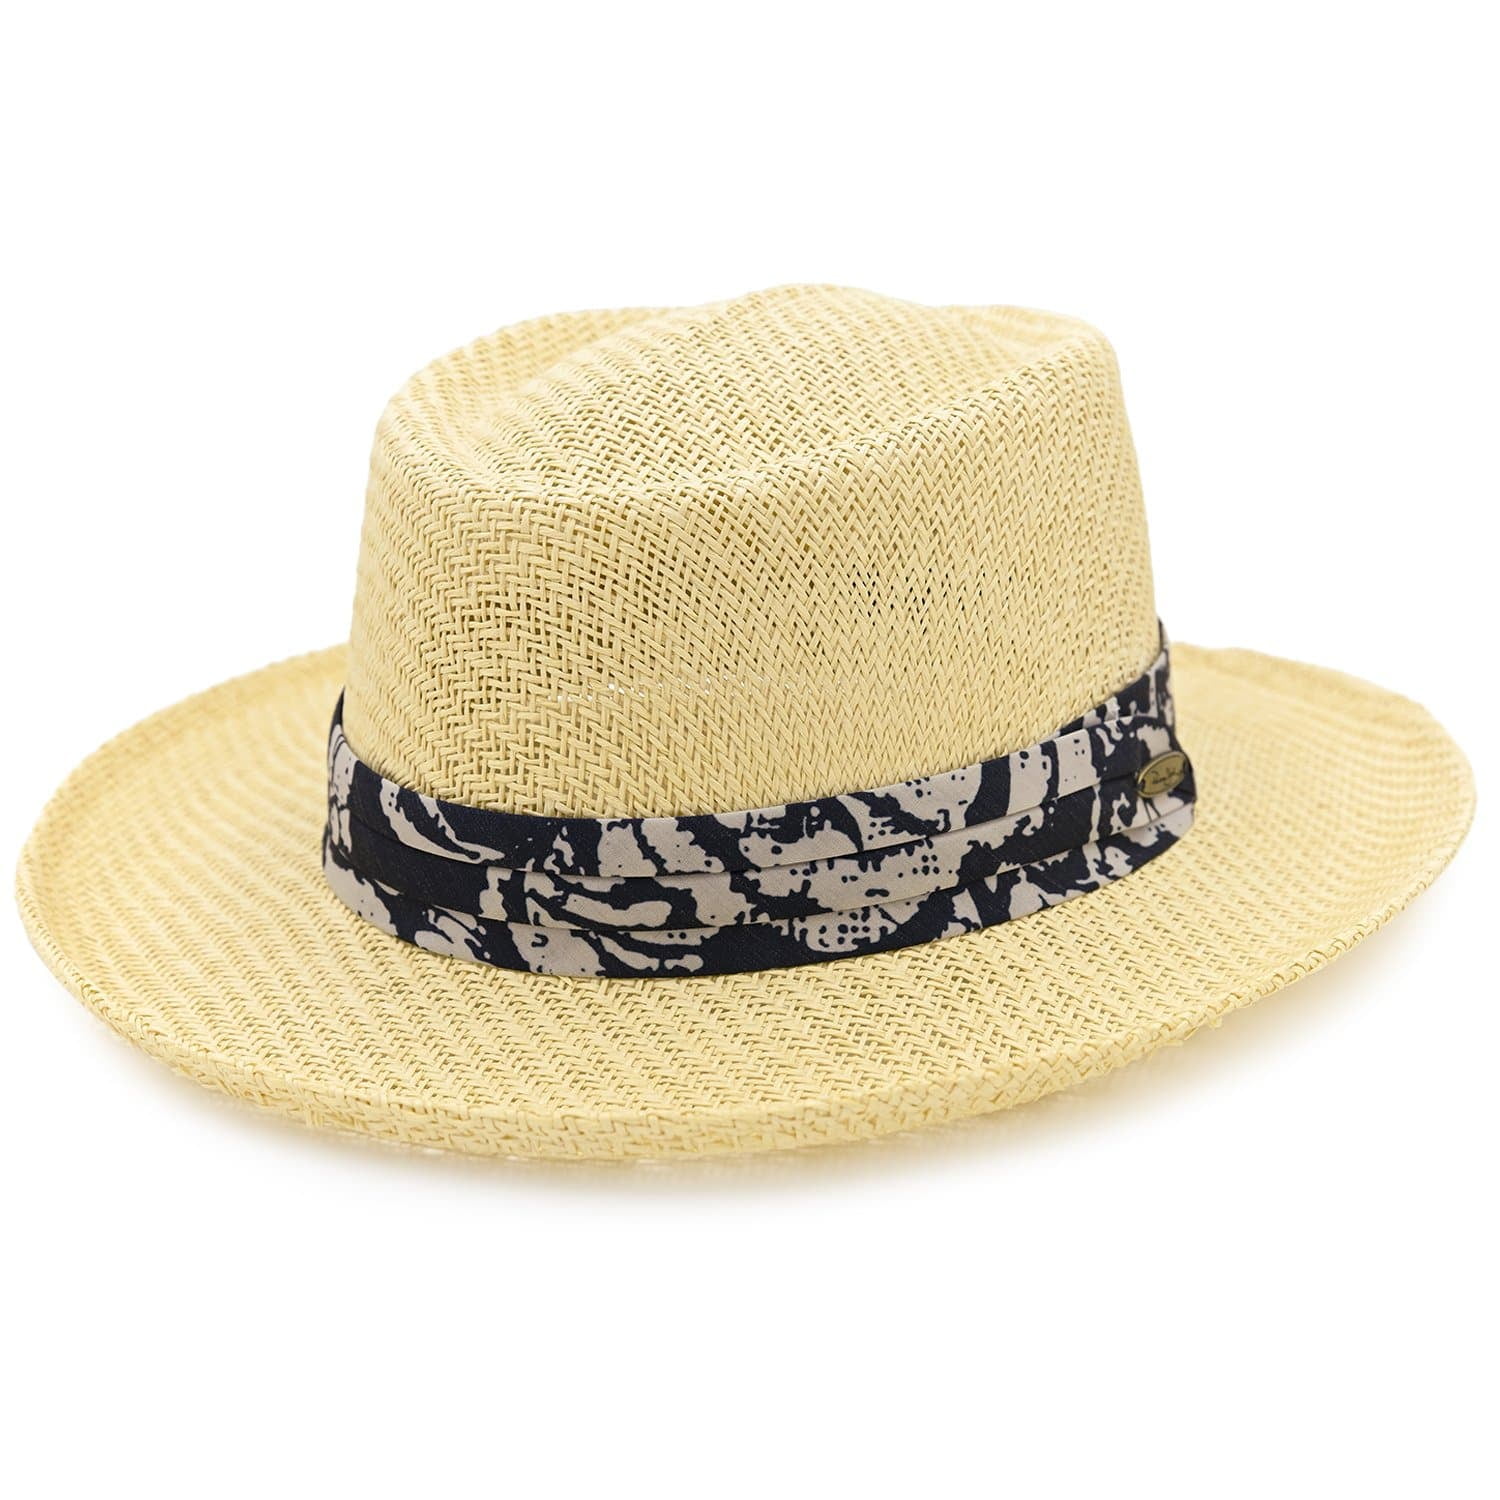 Panama Jack Gambler Straw Hat - Lightweight, 3 Big Brim, Inner Elastic Sweatband, 3-Pleat Ribbon Hat Band (Navy, Small/Medium)